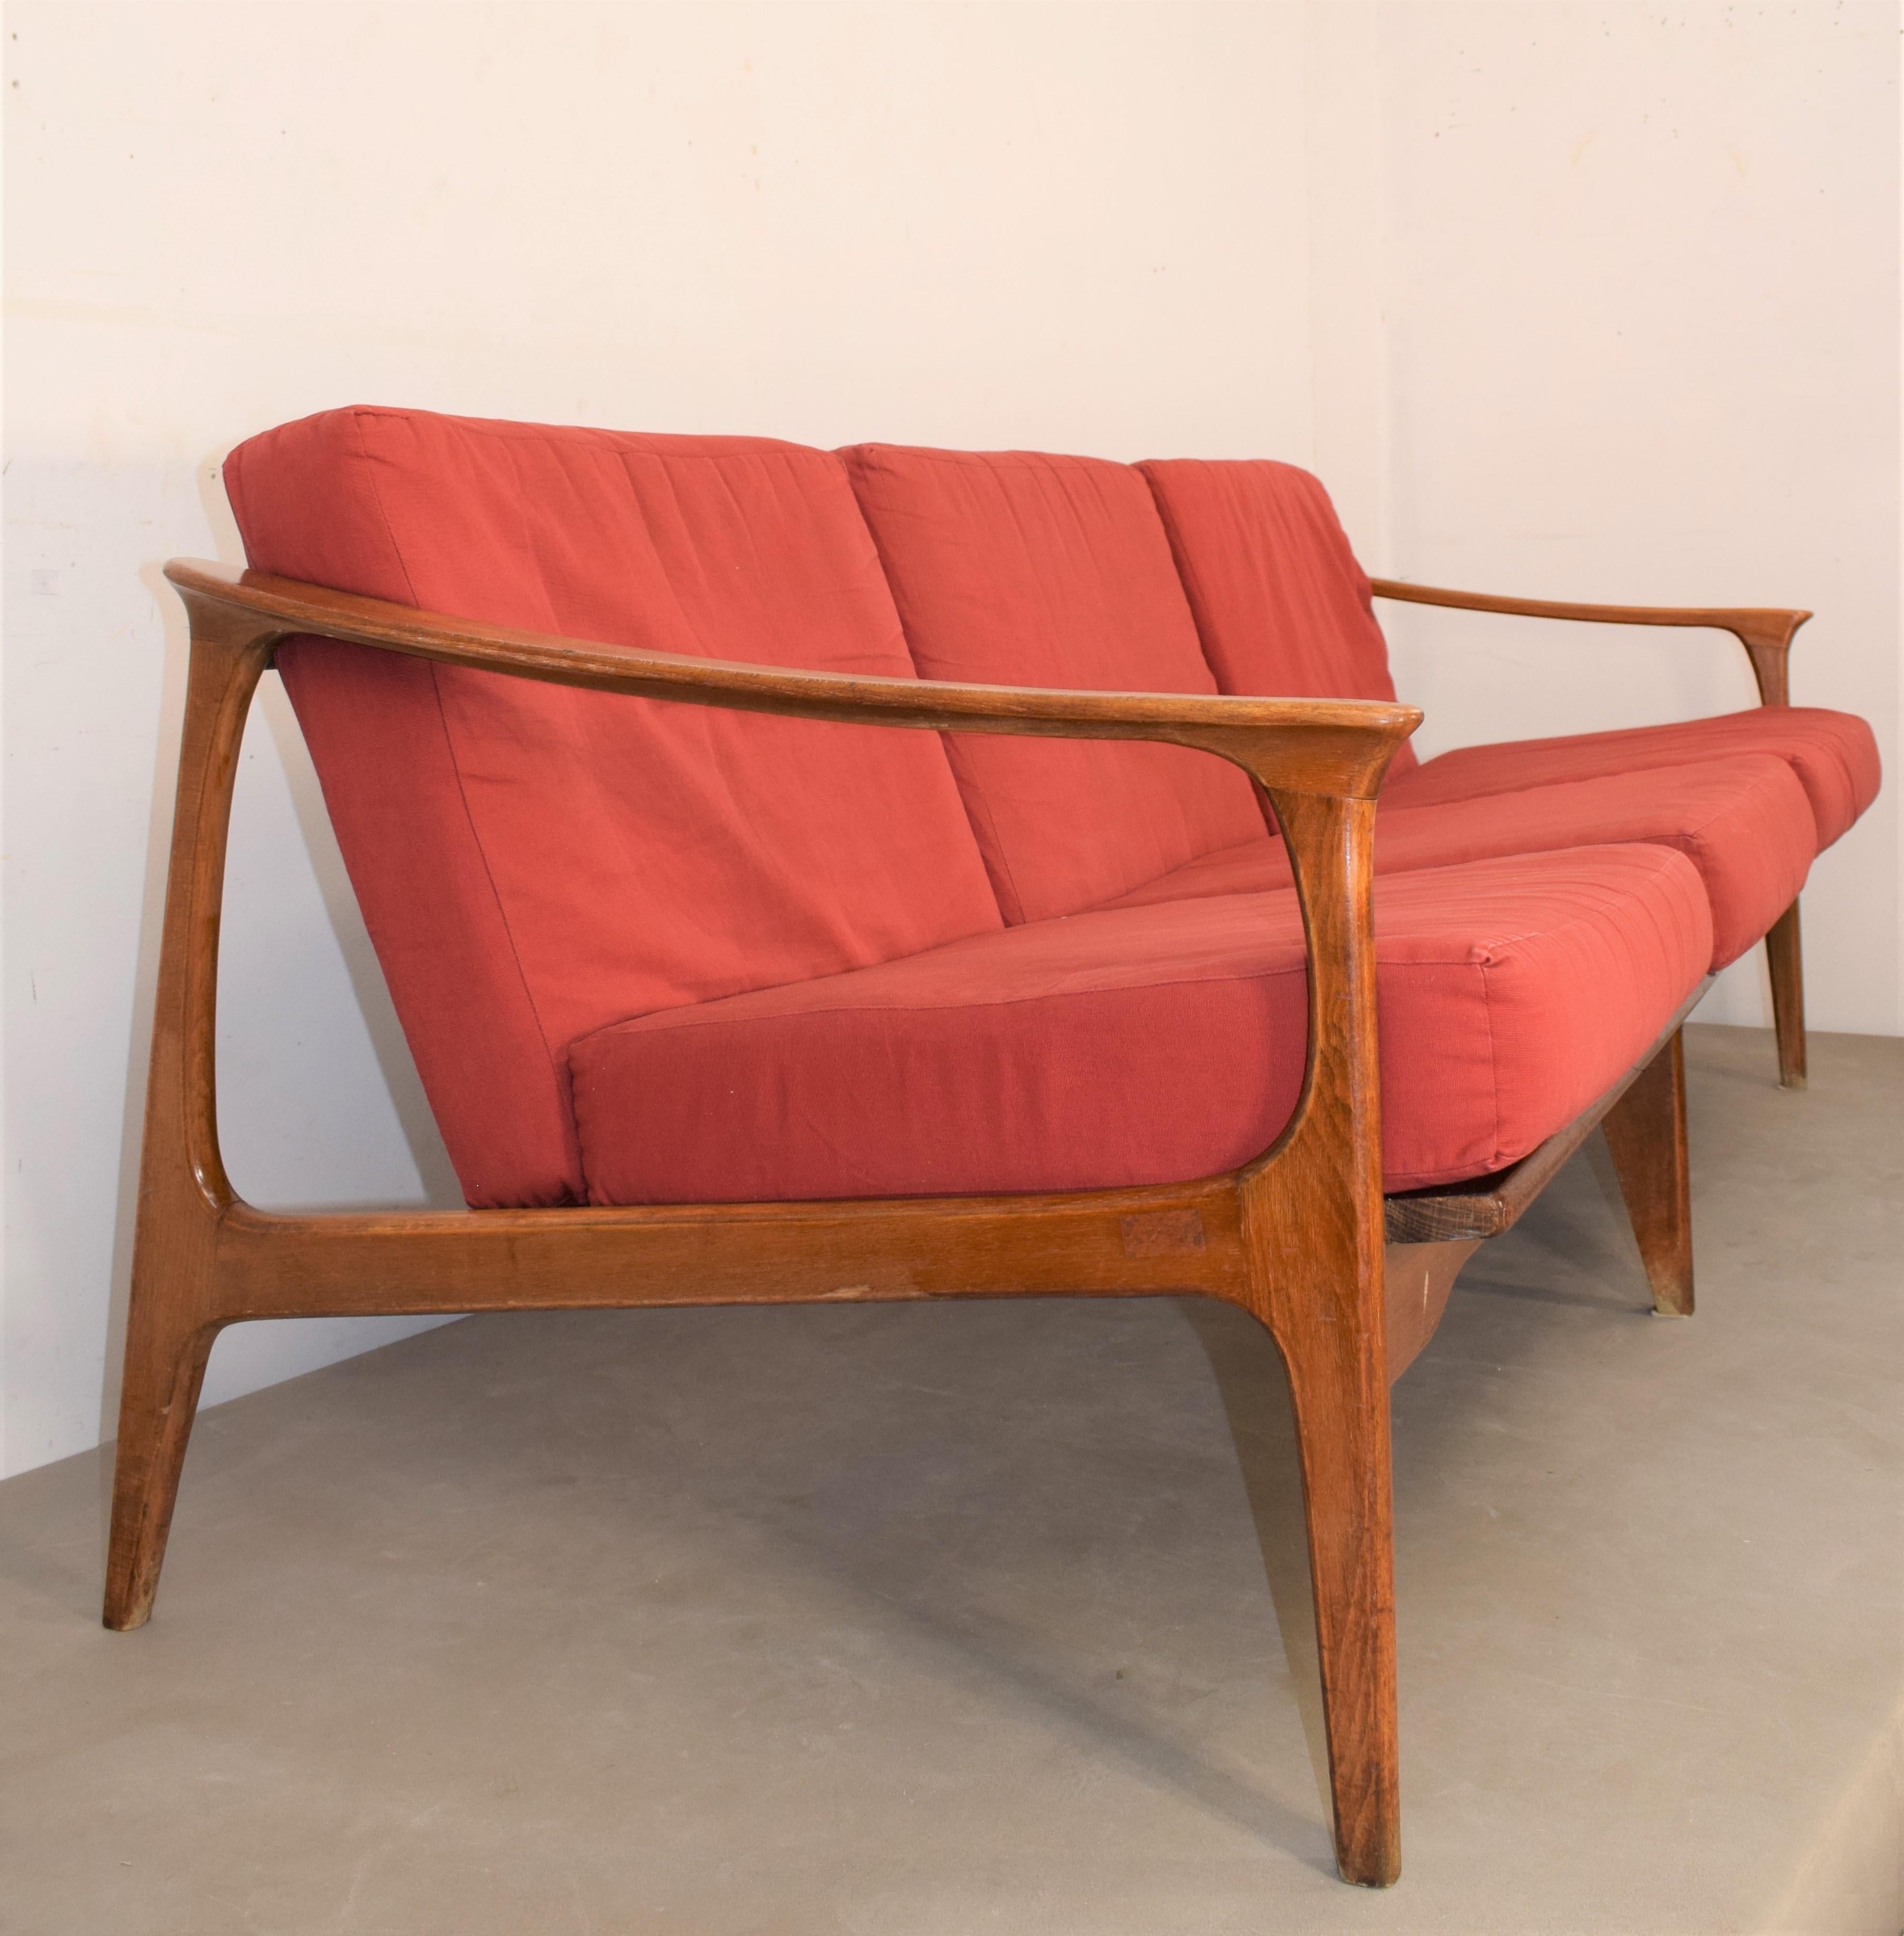 Italian sofa, 1960s.
Dimensions: H=72 cm; W= 190 cm; D= 90; Seat Height= 43 cm.